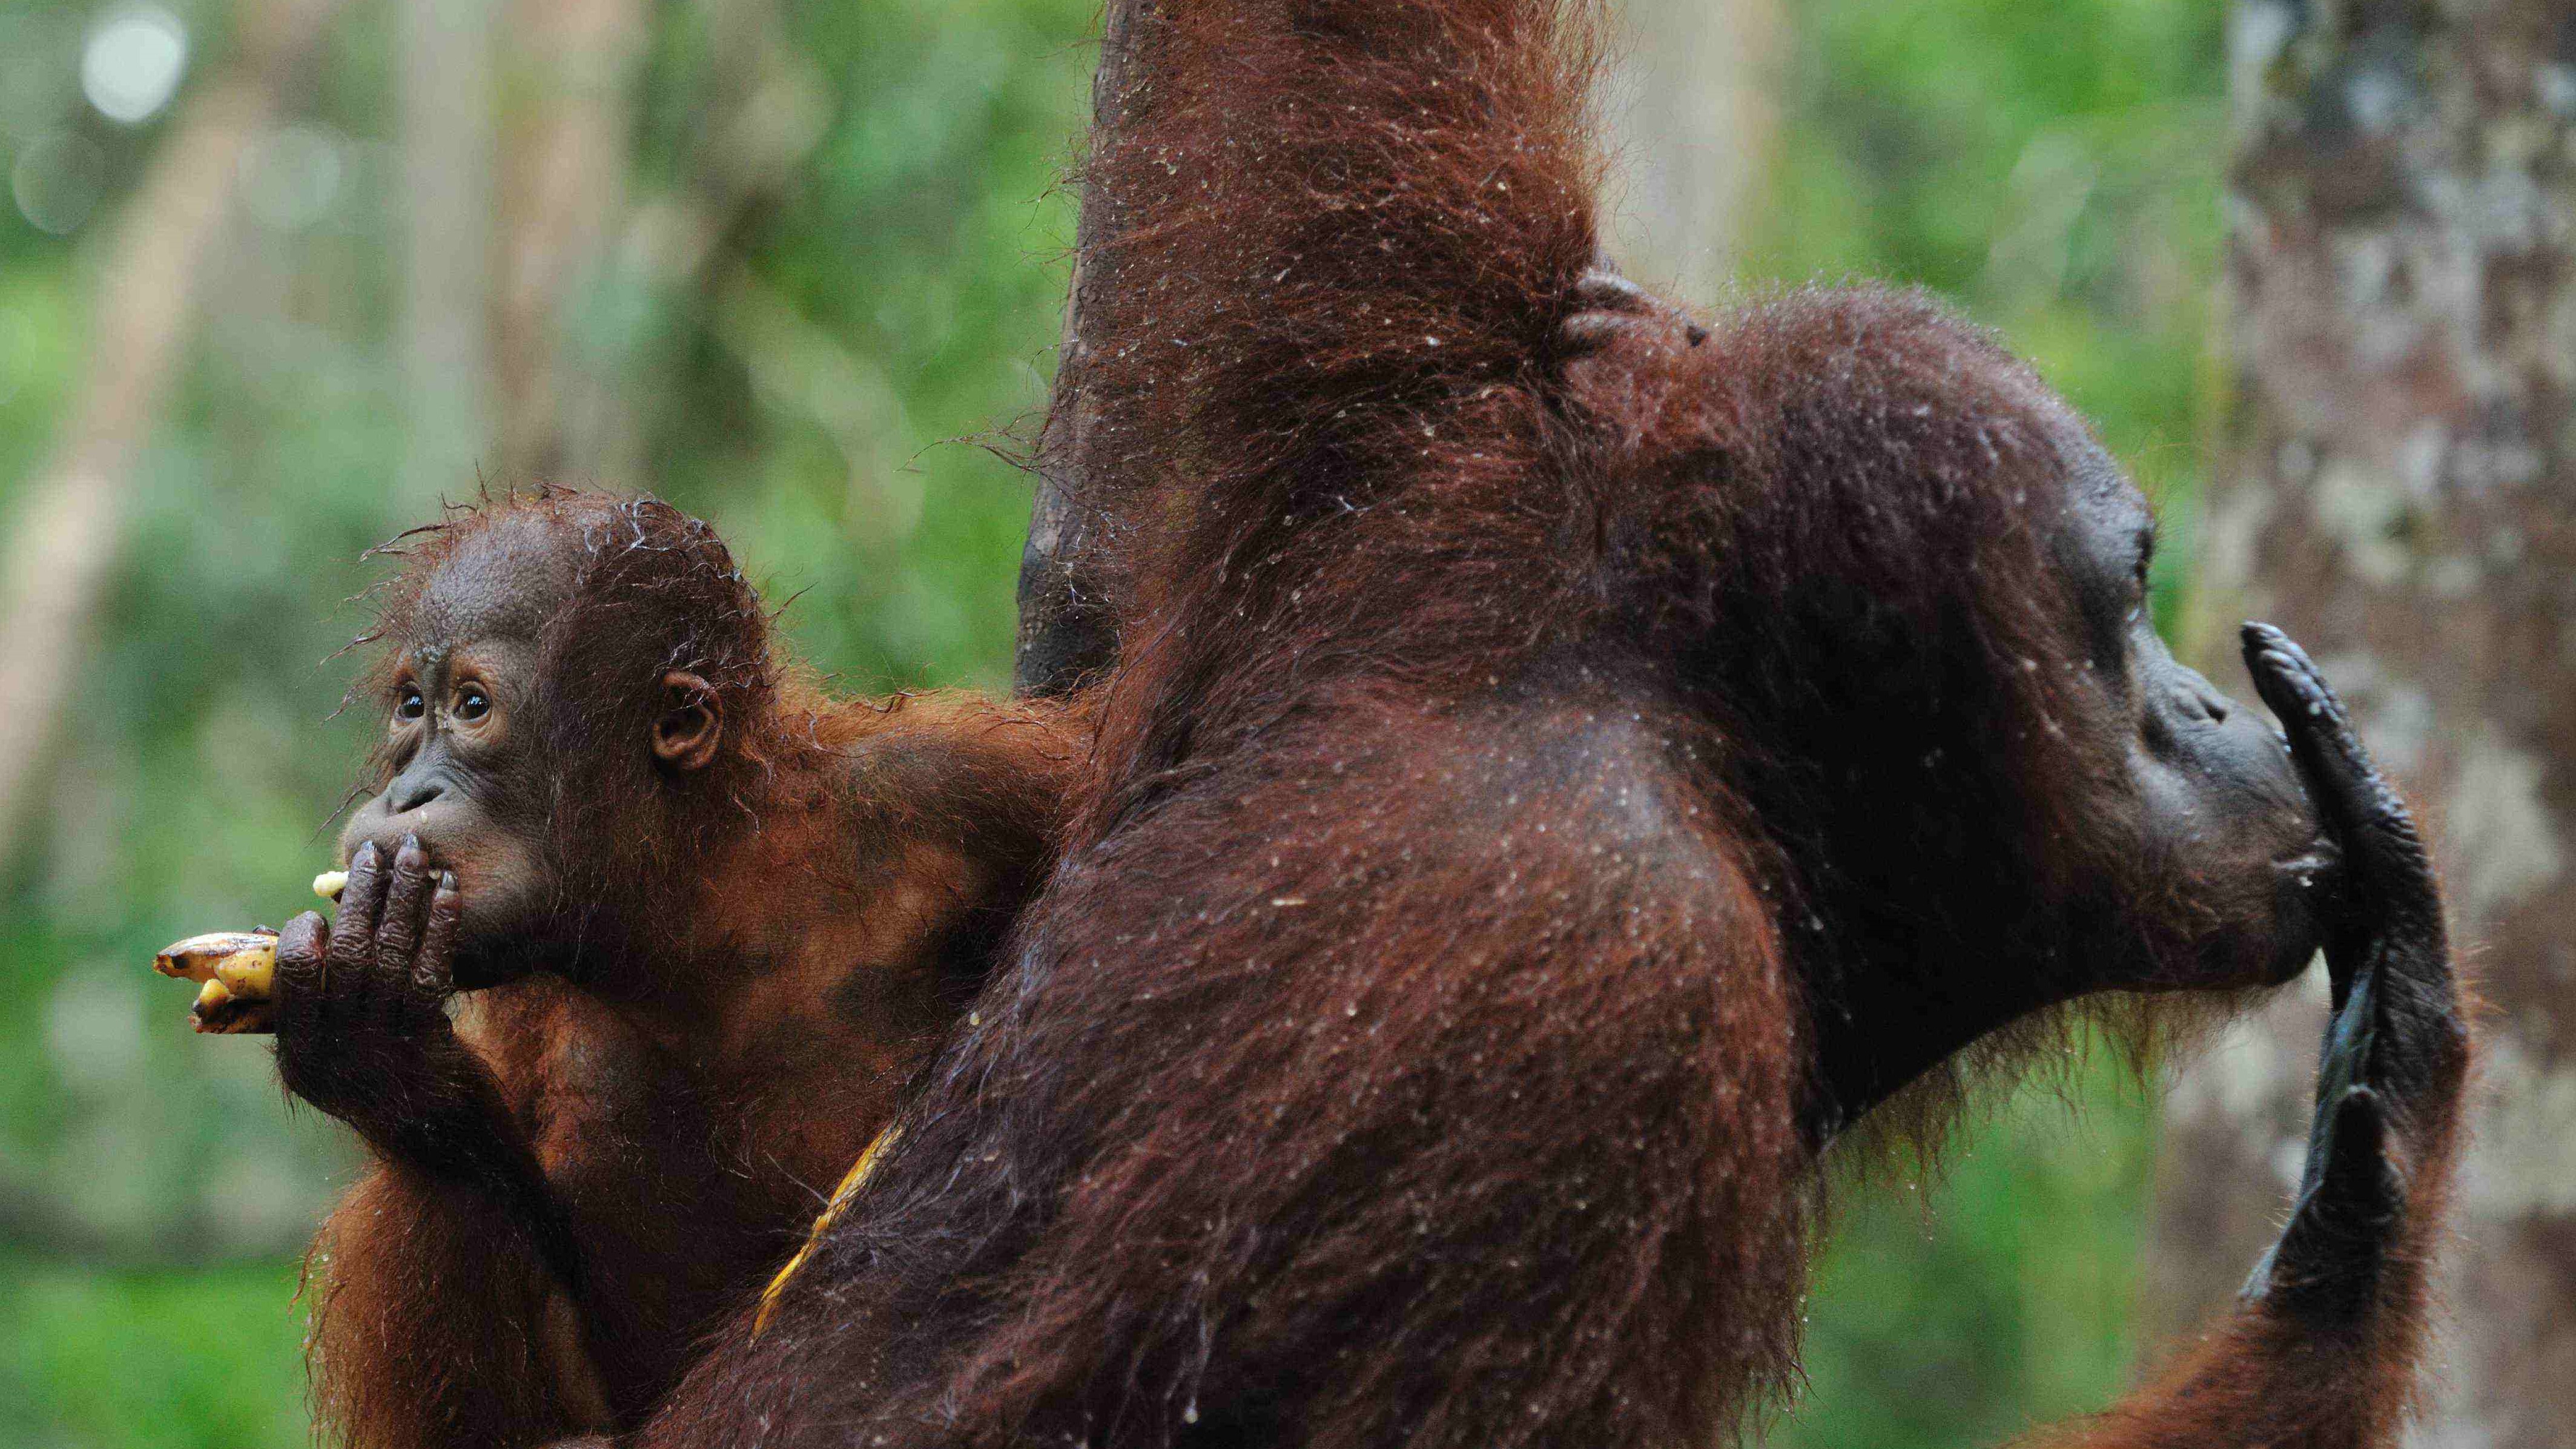 cruise the rivers explore trip tours, kutai park, orangutan jungle